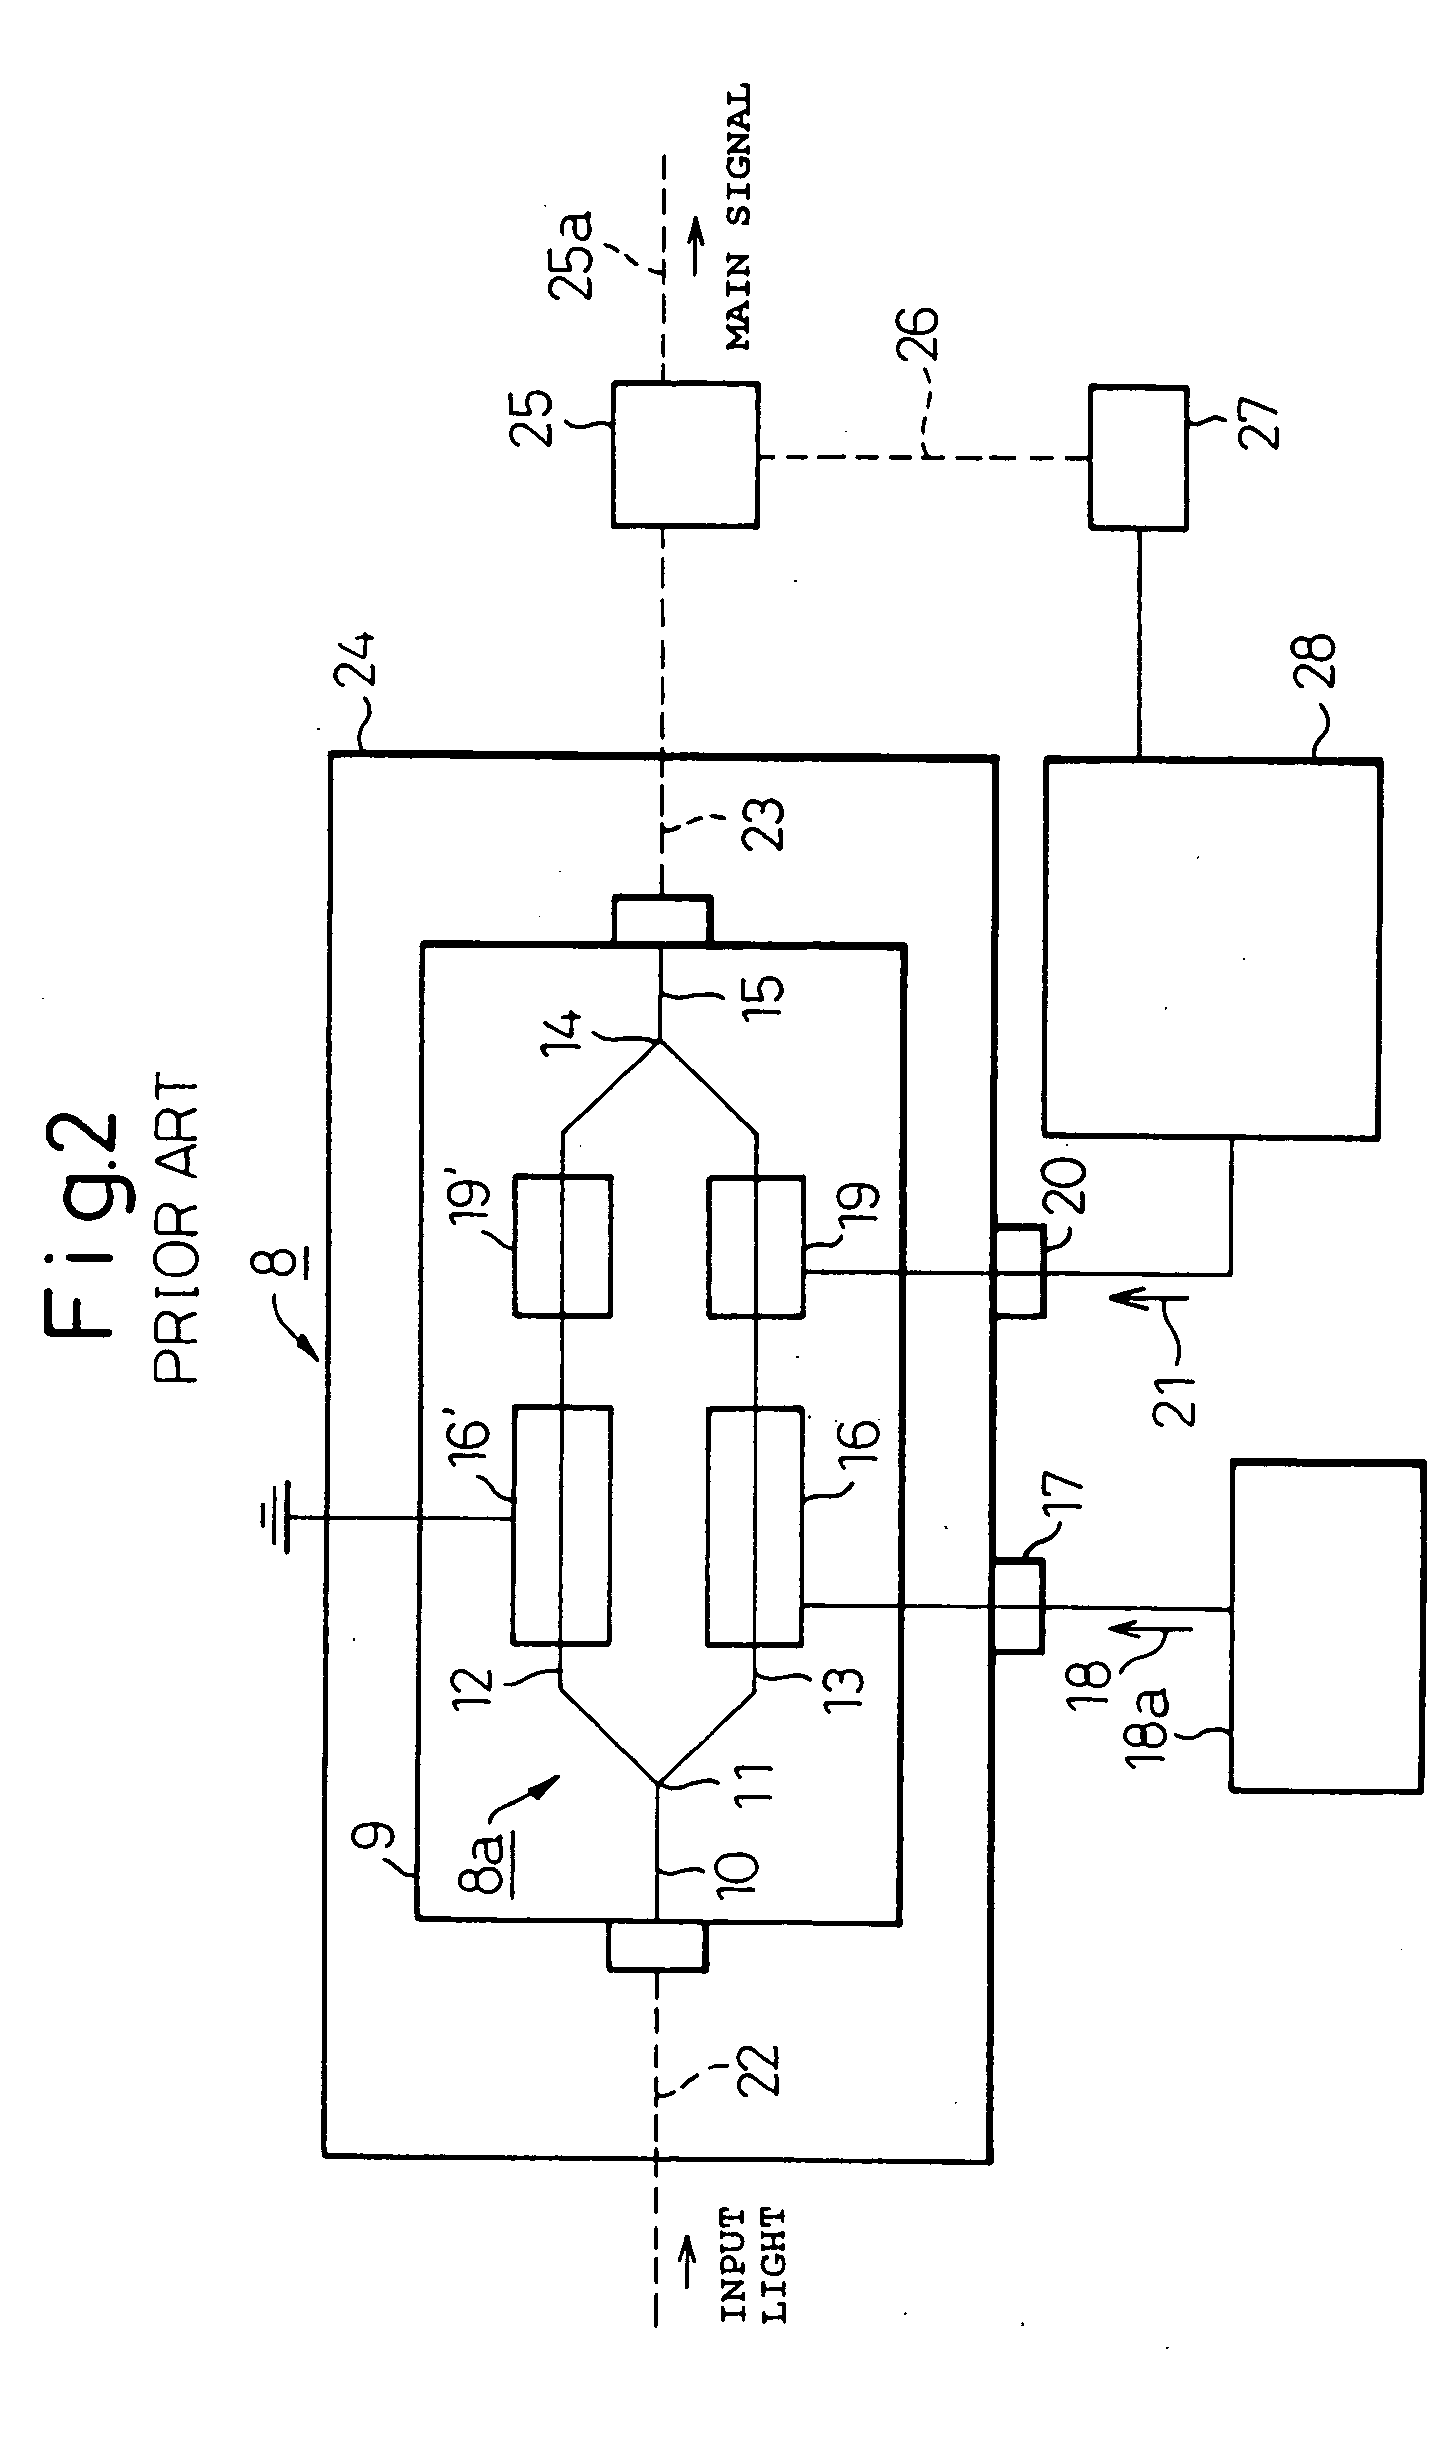 Optical waveguide modulator with output light monitor